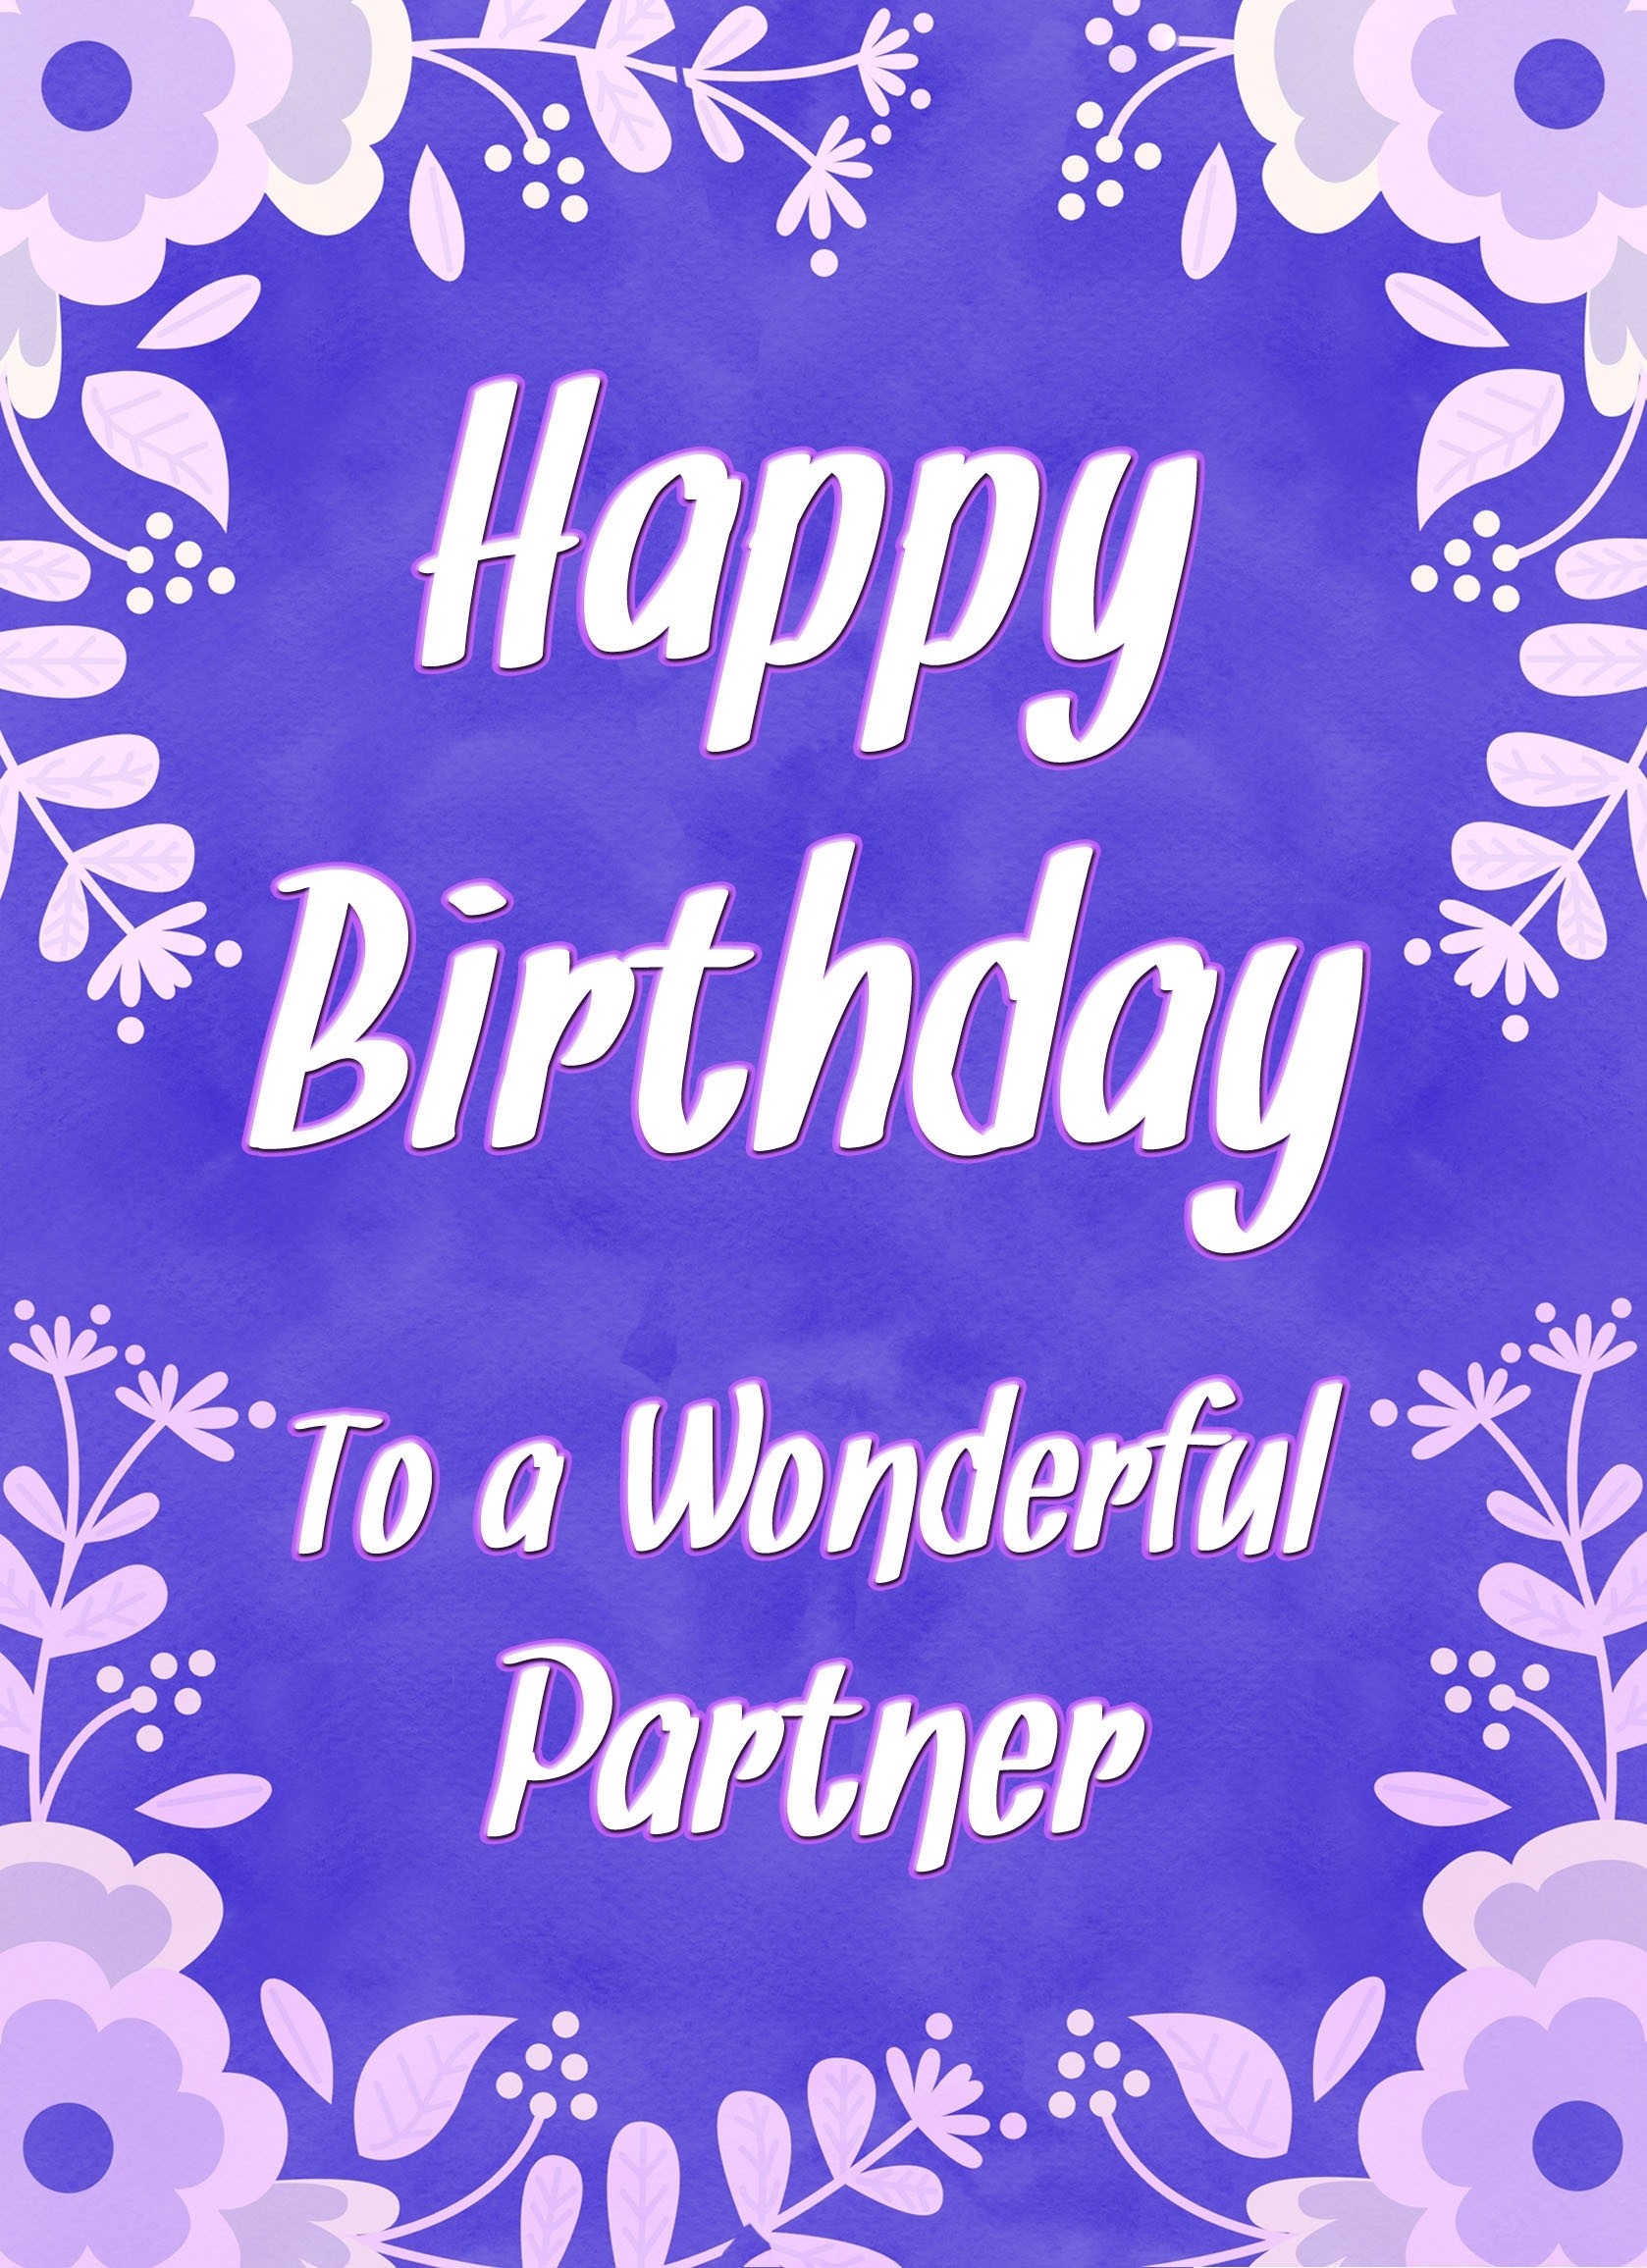 Birthday Card For Wonderful Partner (Purple Border)